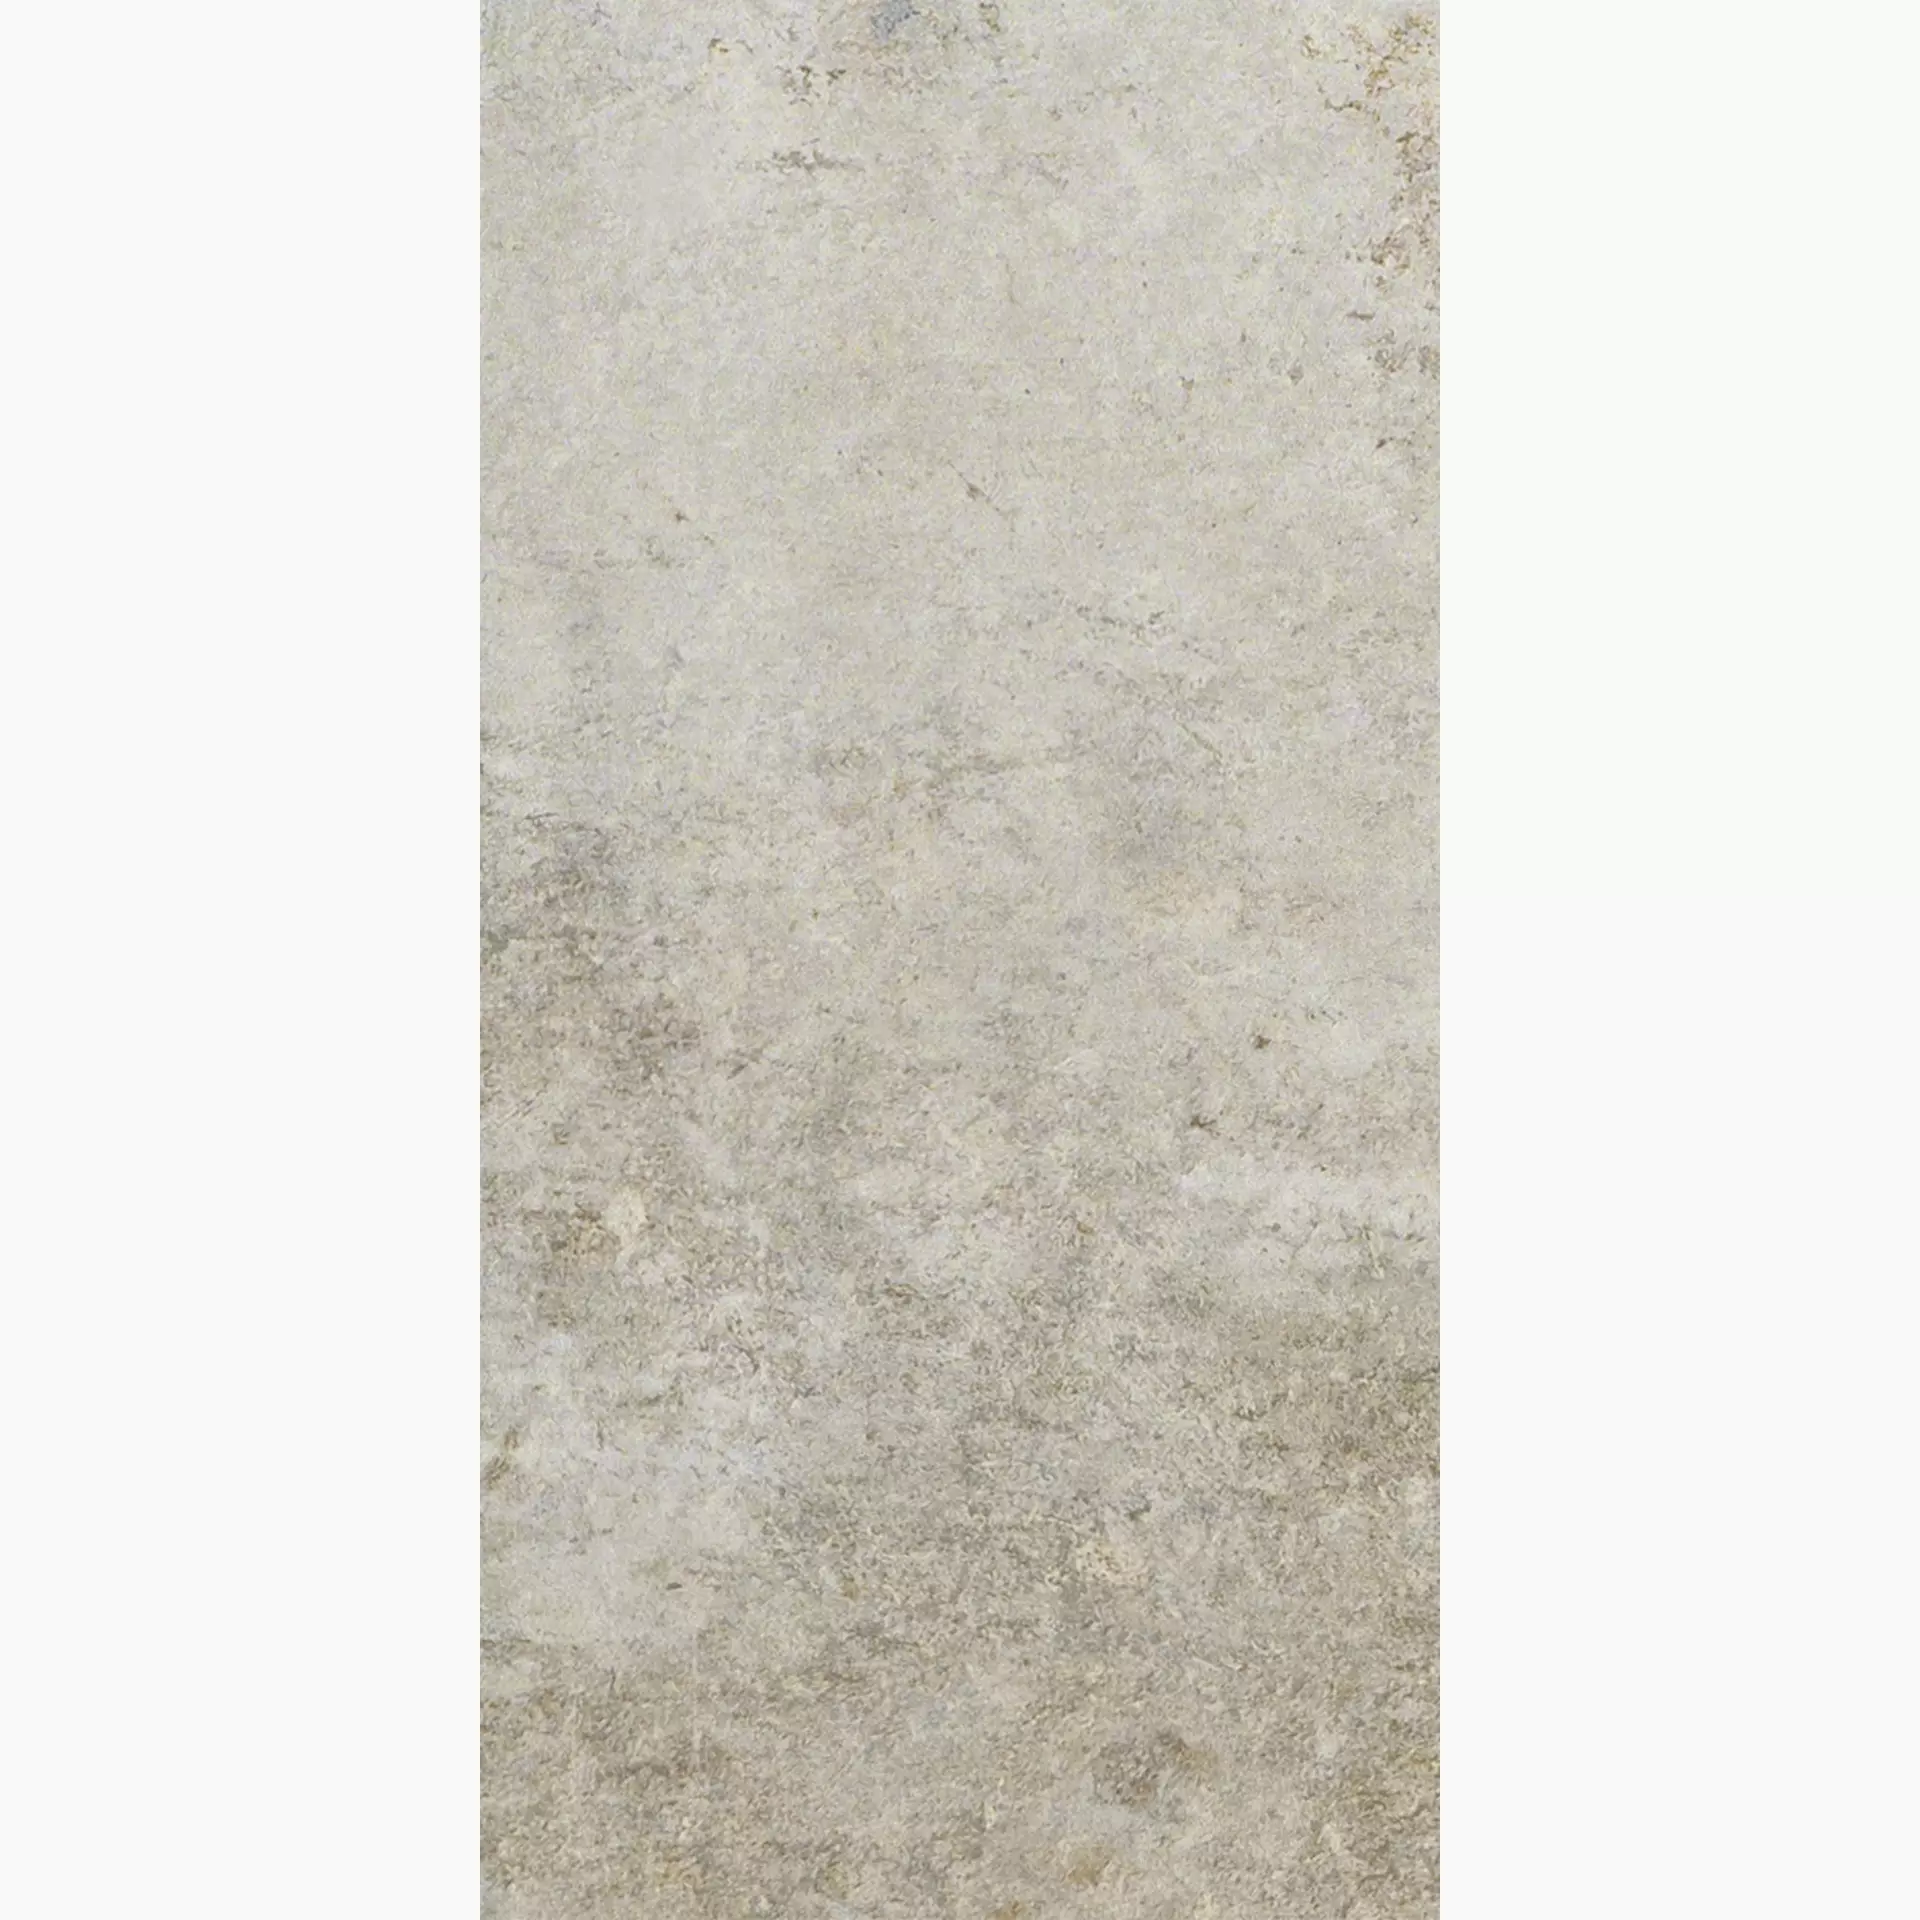 Florim Artifact Of Cerim Worn Sand Naturale – Matt 760628 30x60cm rectified 9mm